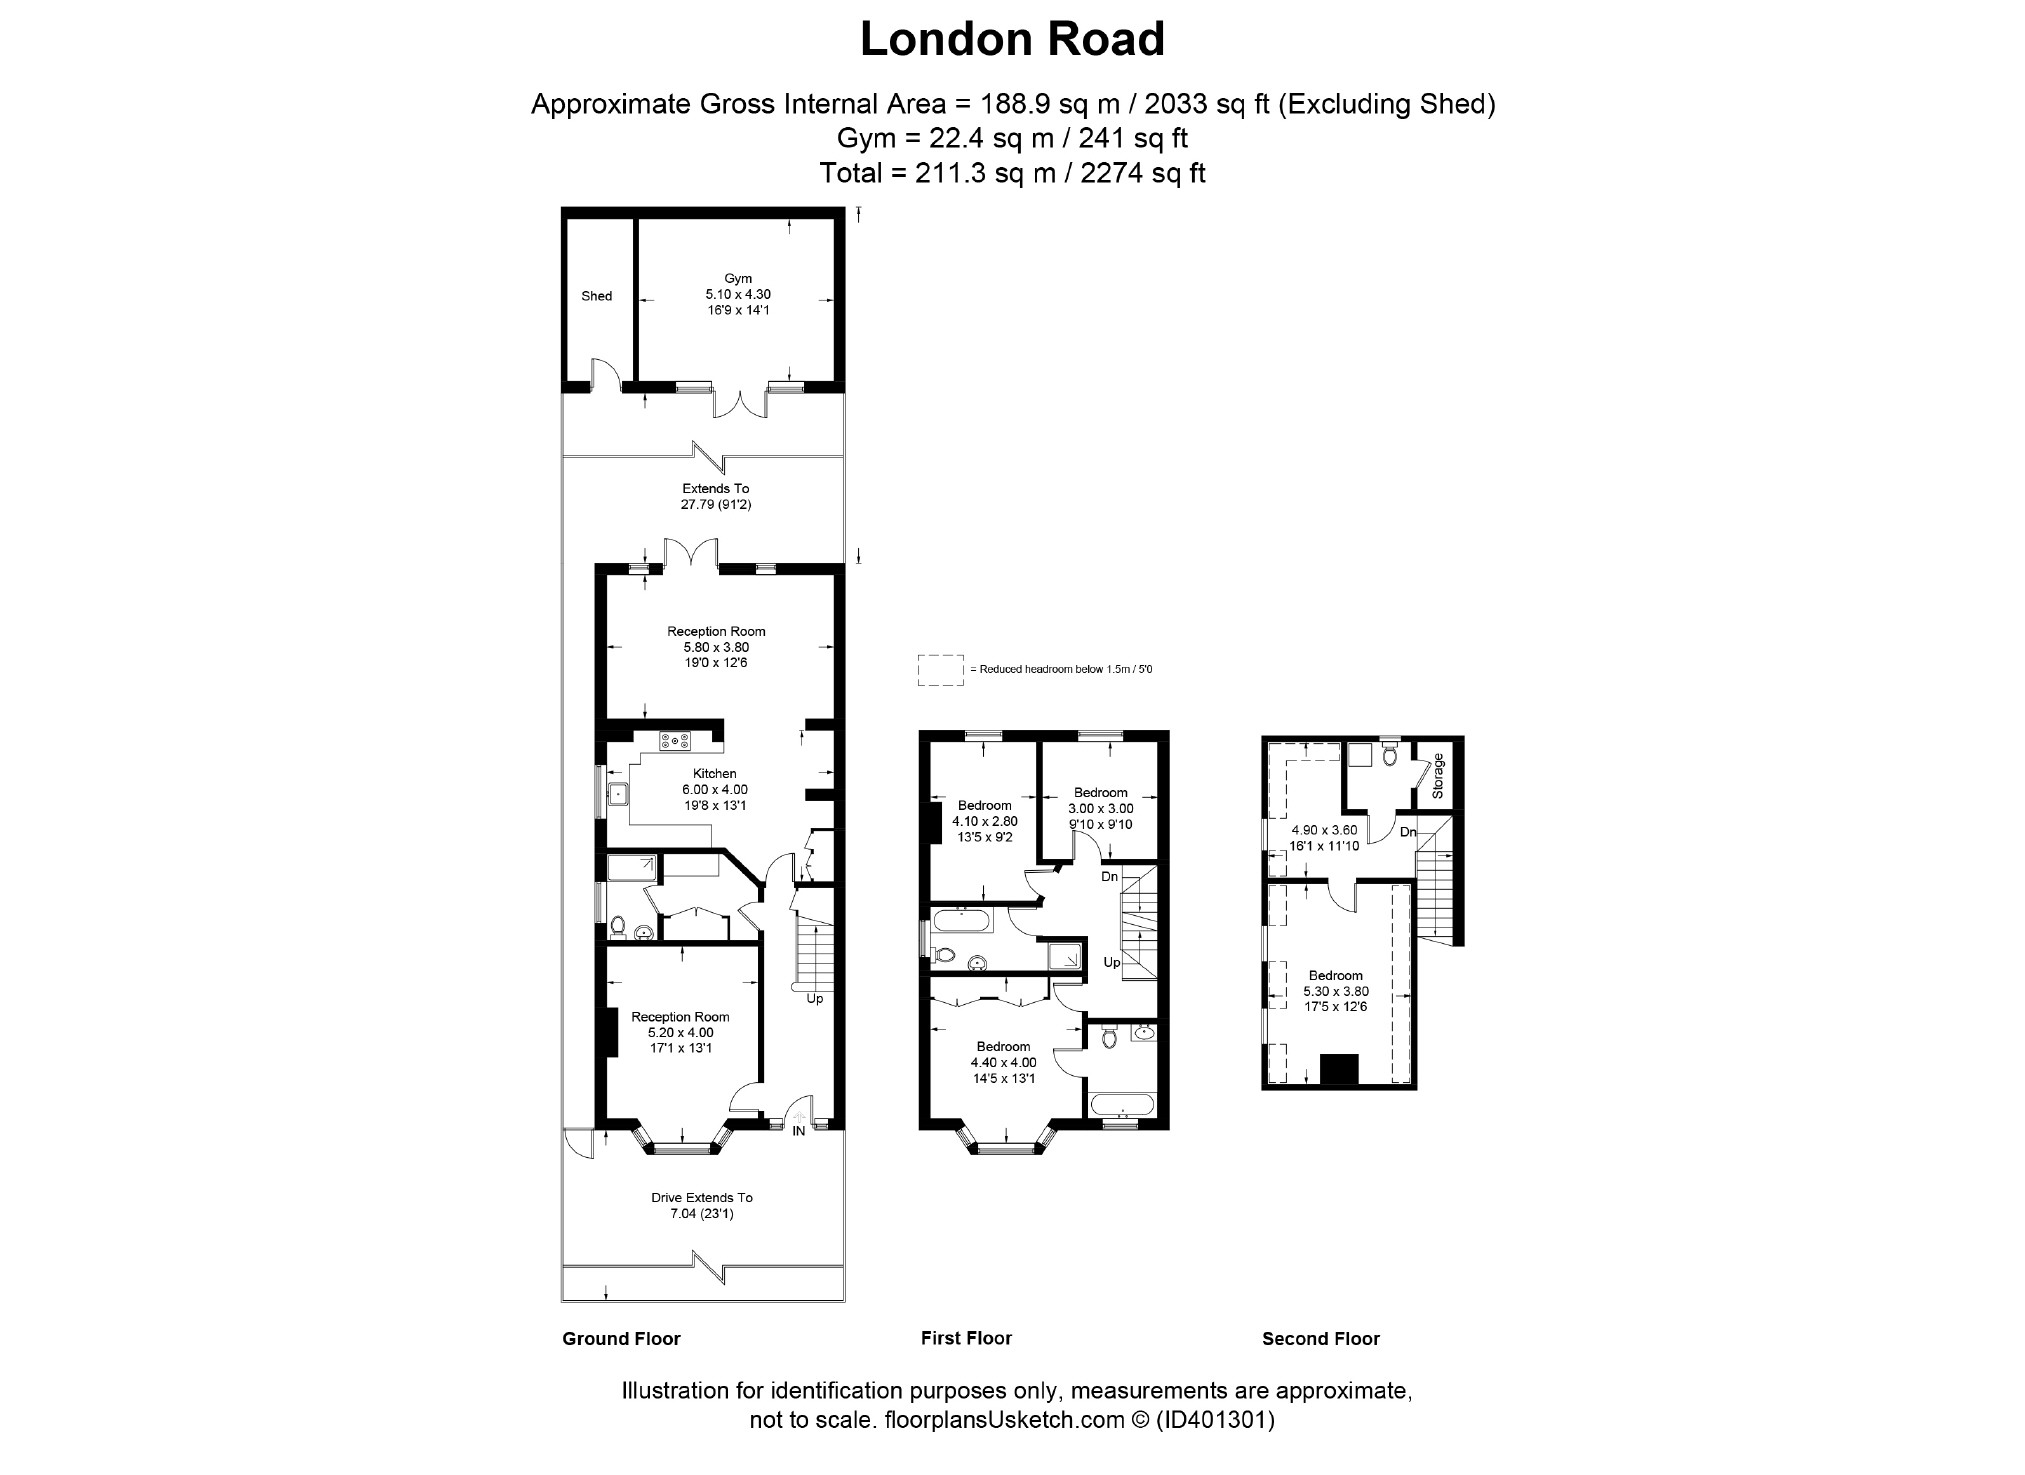 4 Bedrooms Semi-detached house for sale in London Road, Epsom, Surrey KT17